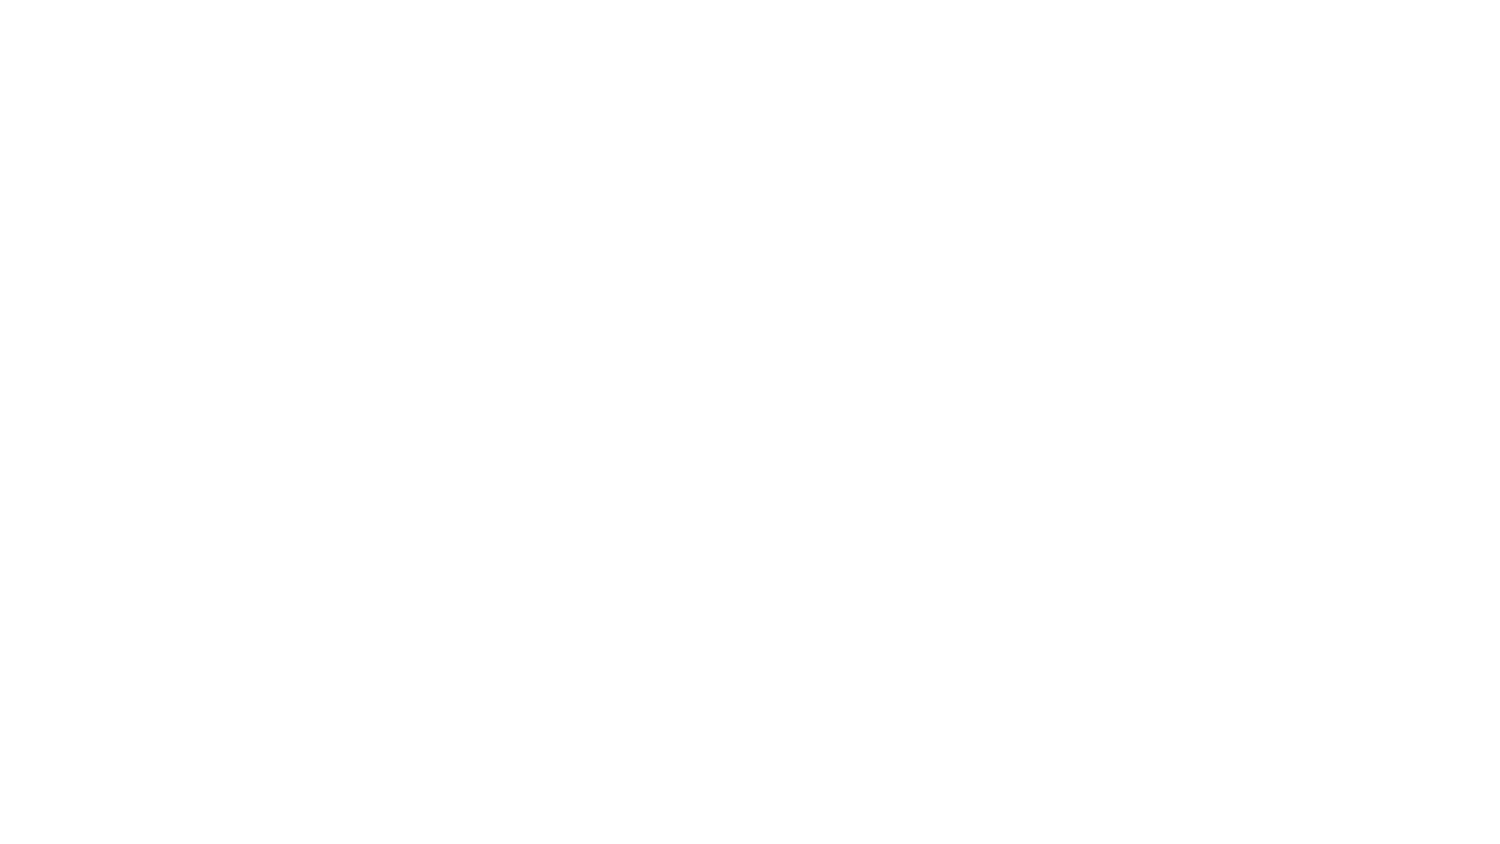 The Beverley Barn